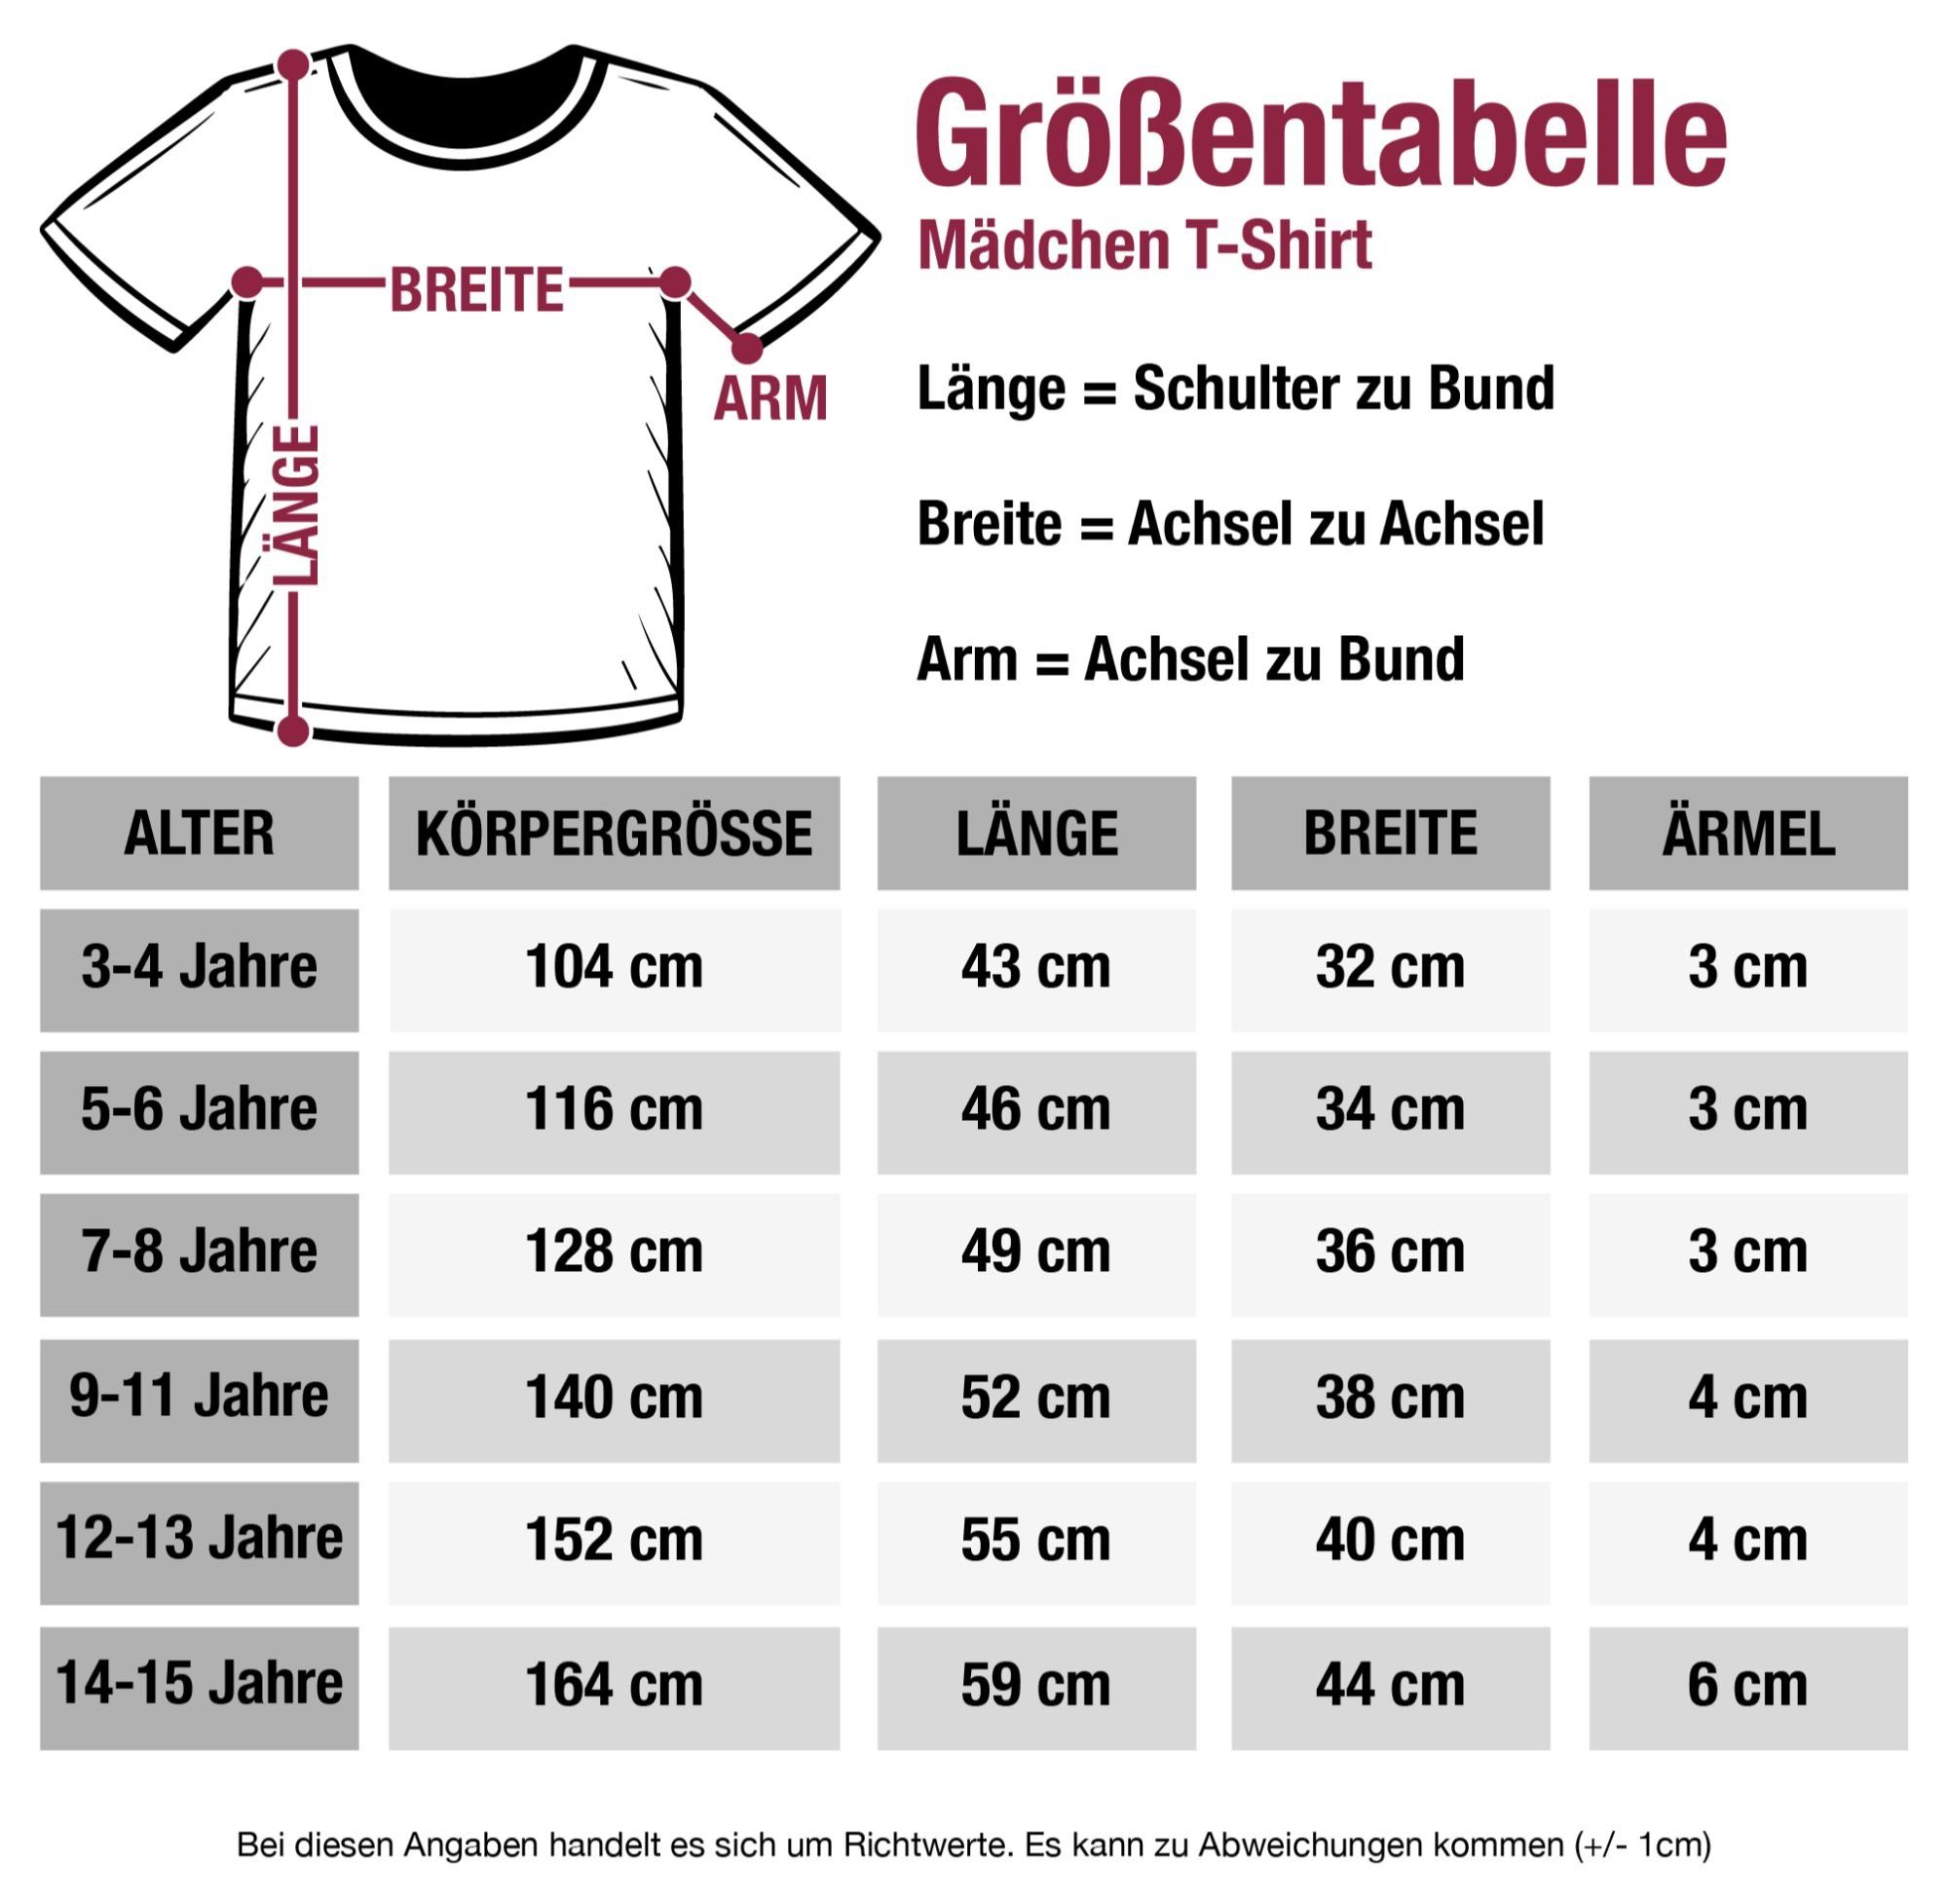 Shirtracer T-Shirt Lausmadl Hirsch Mode Rosa Kinder 2 Outfit für Oktoberfest